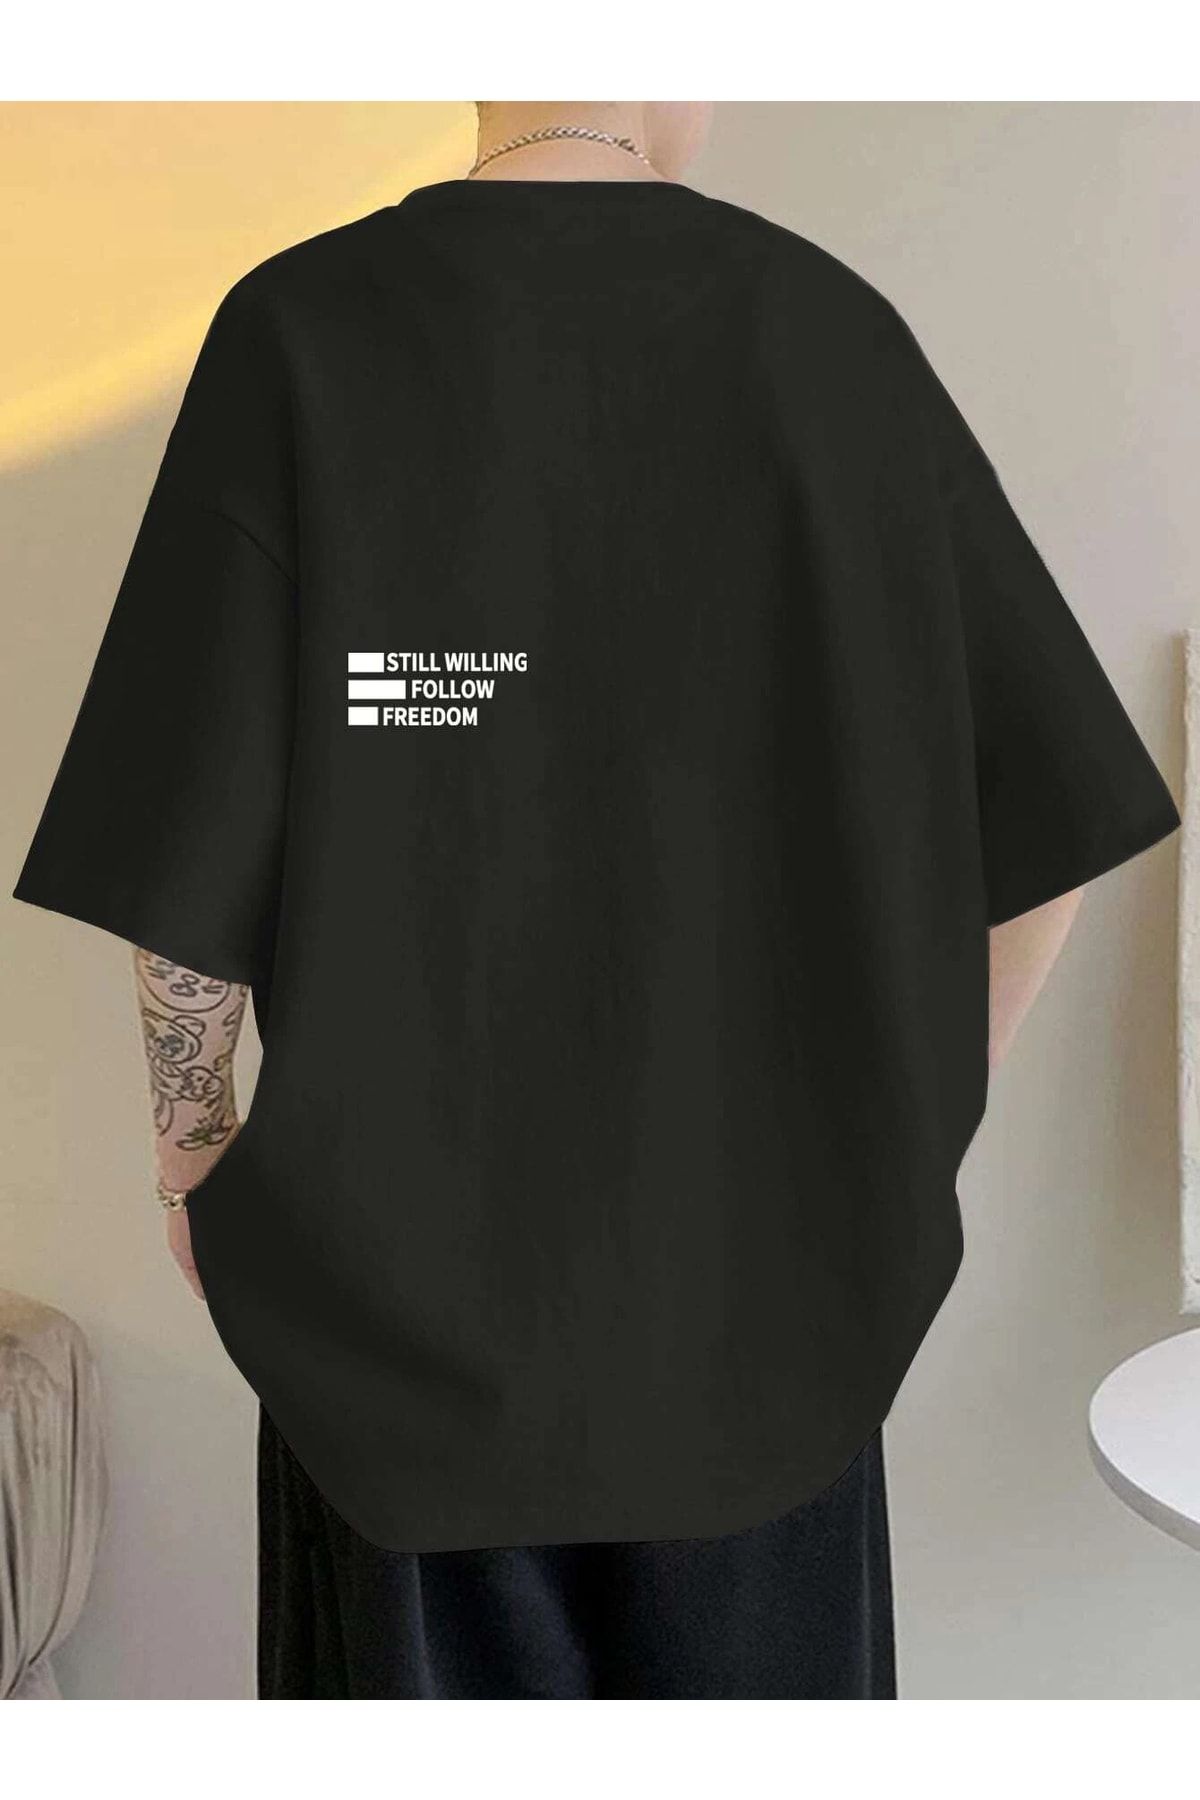 VBSVİBES Unisex Siyah Oversiz Still Follow Freedom Baskılı Örme T-shirt